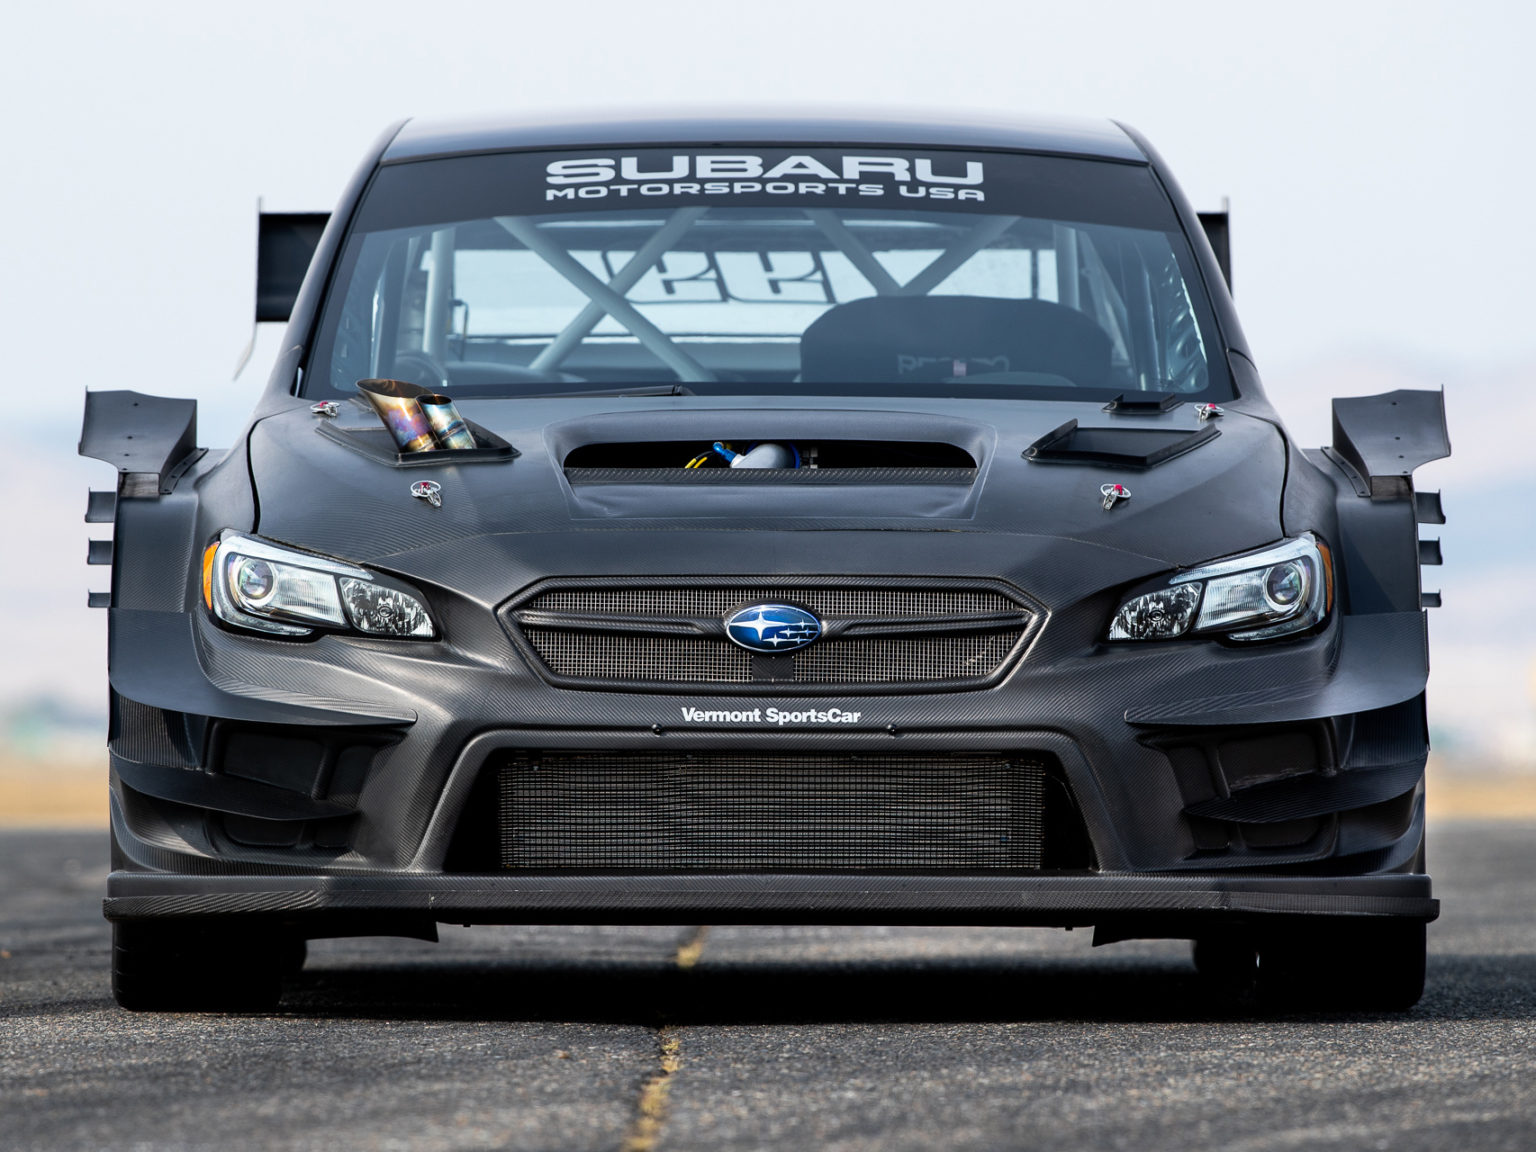 Travis Pastrana's new Subaru WRX STI has been customized for the next Gymkhana film.